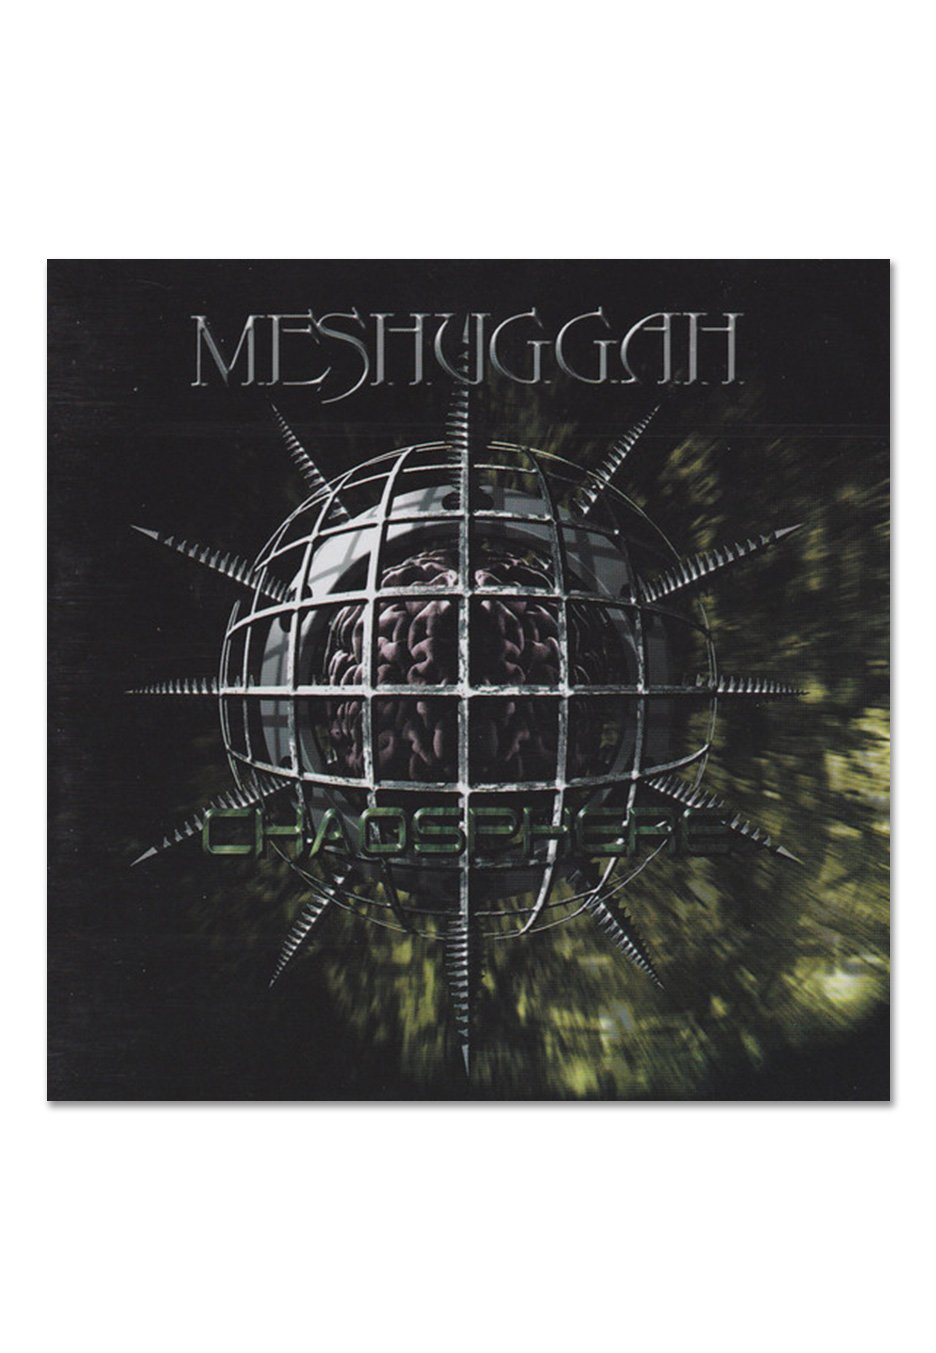 Meshuggah - Chaosphere (25th Anniversary Remaster) Ltd. White/Orange/Black - Marbled 2 Vinyl